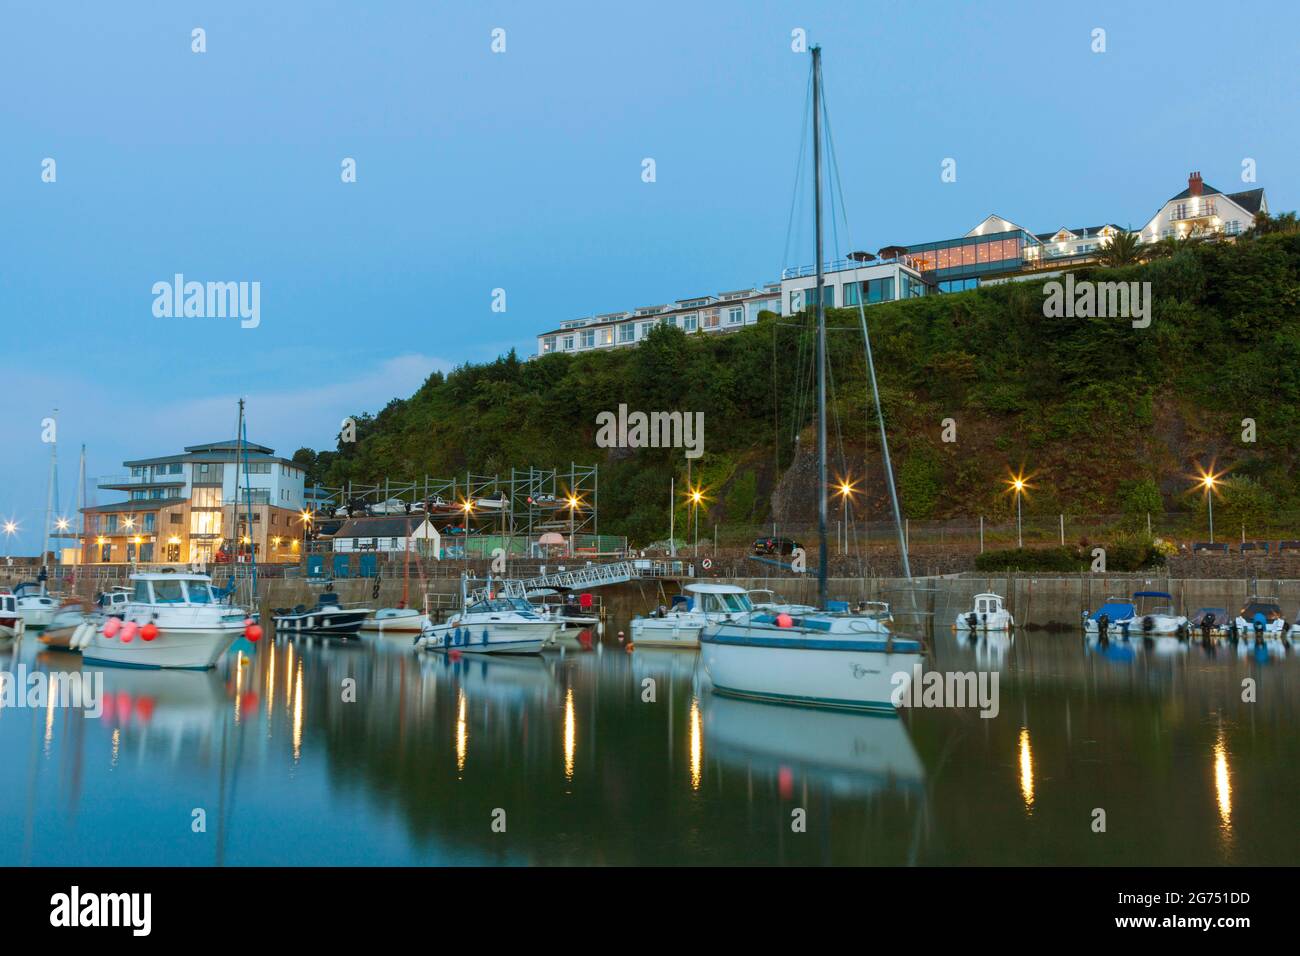 St Brides Spar Hotel, Saundersfoot Harbour, Pembrokeshire, Wales, UK Stock Photo